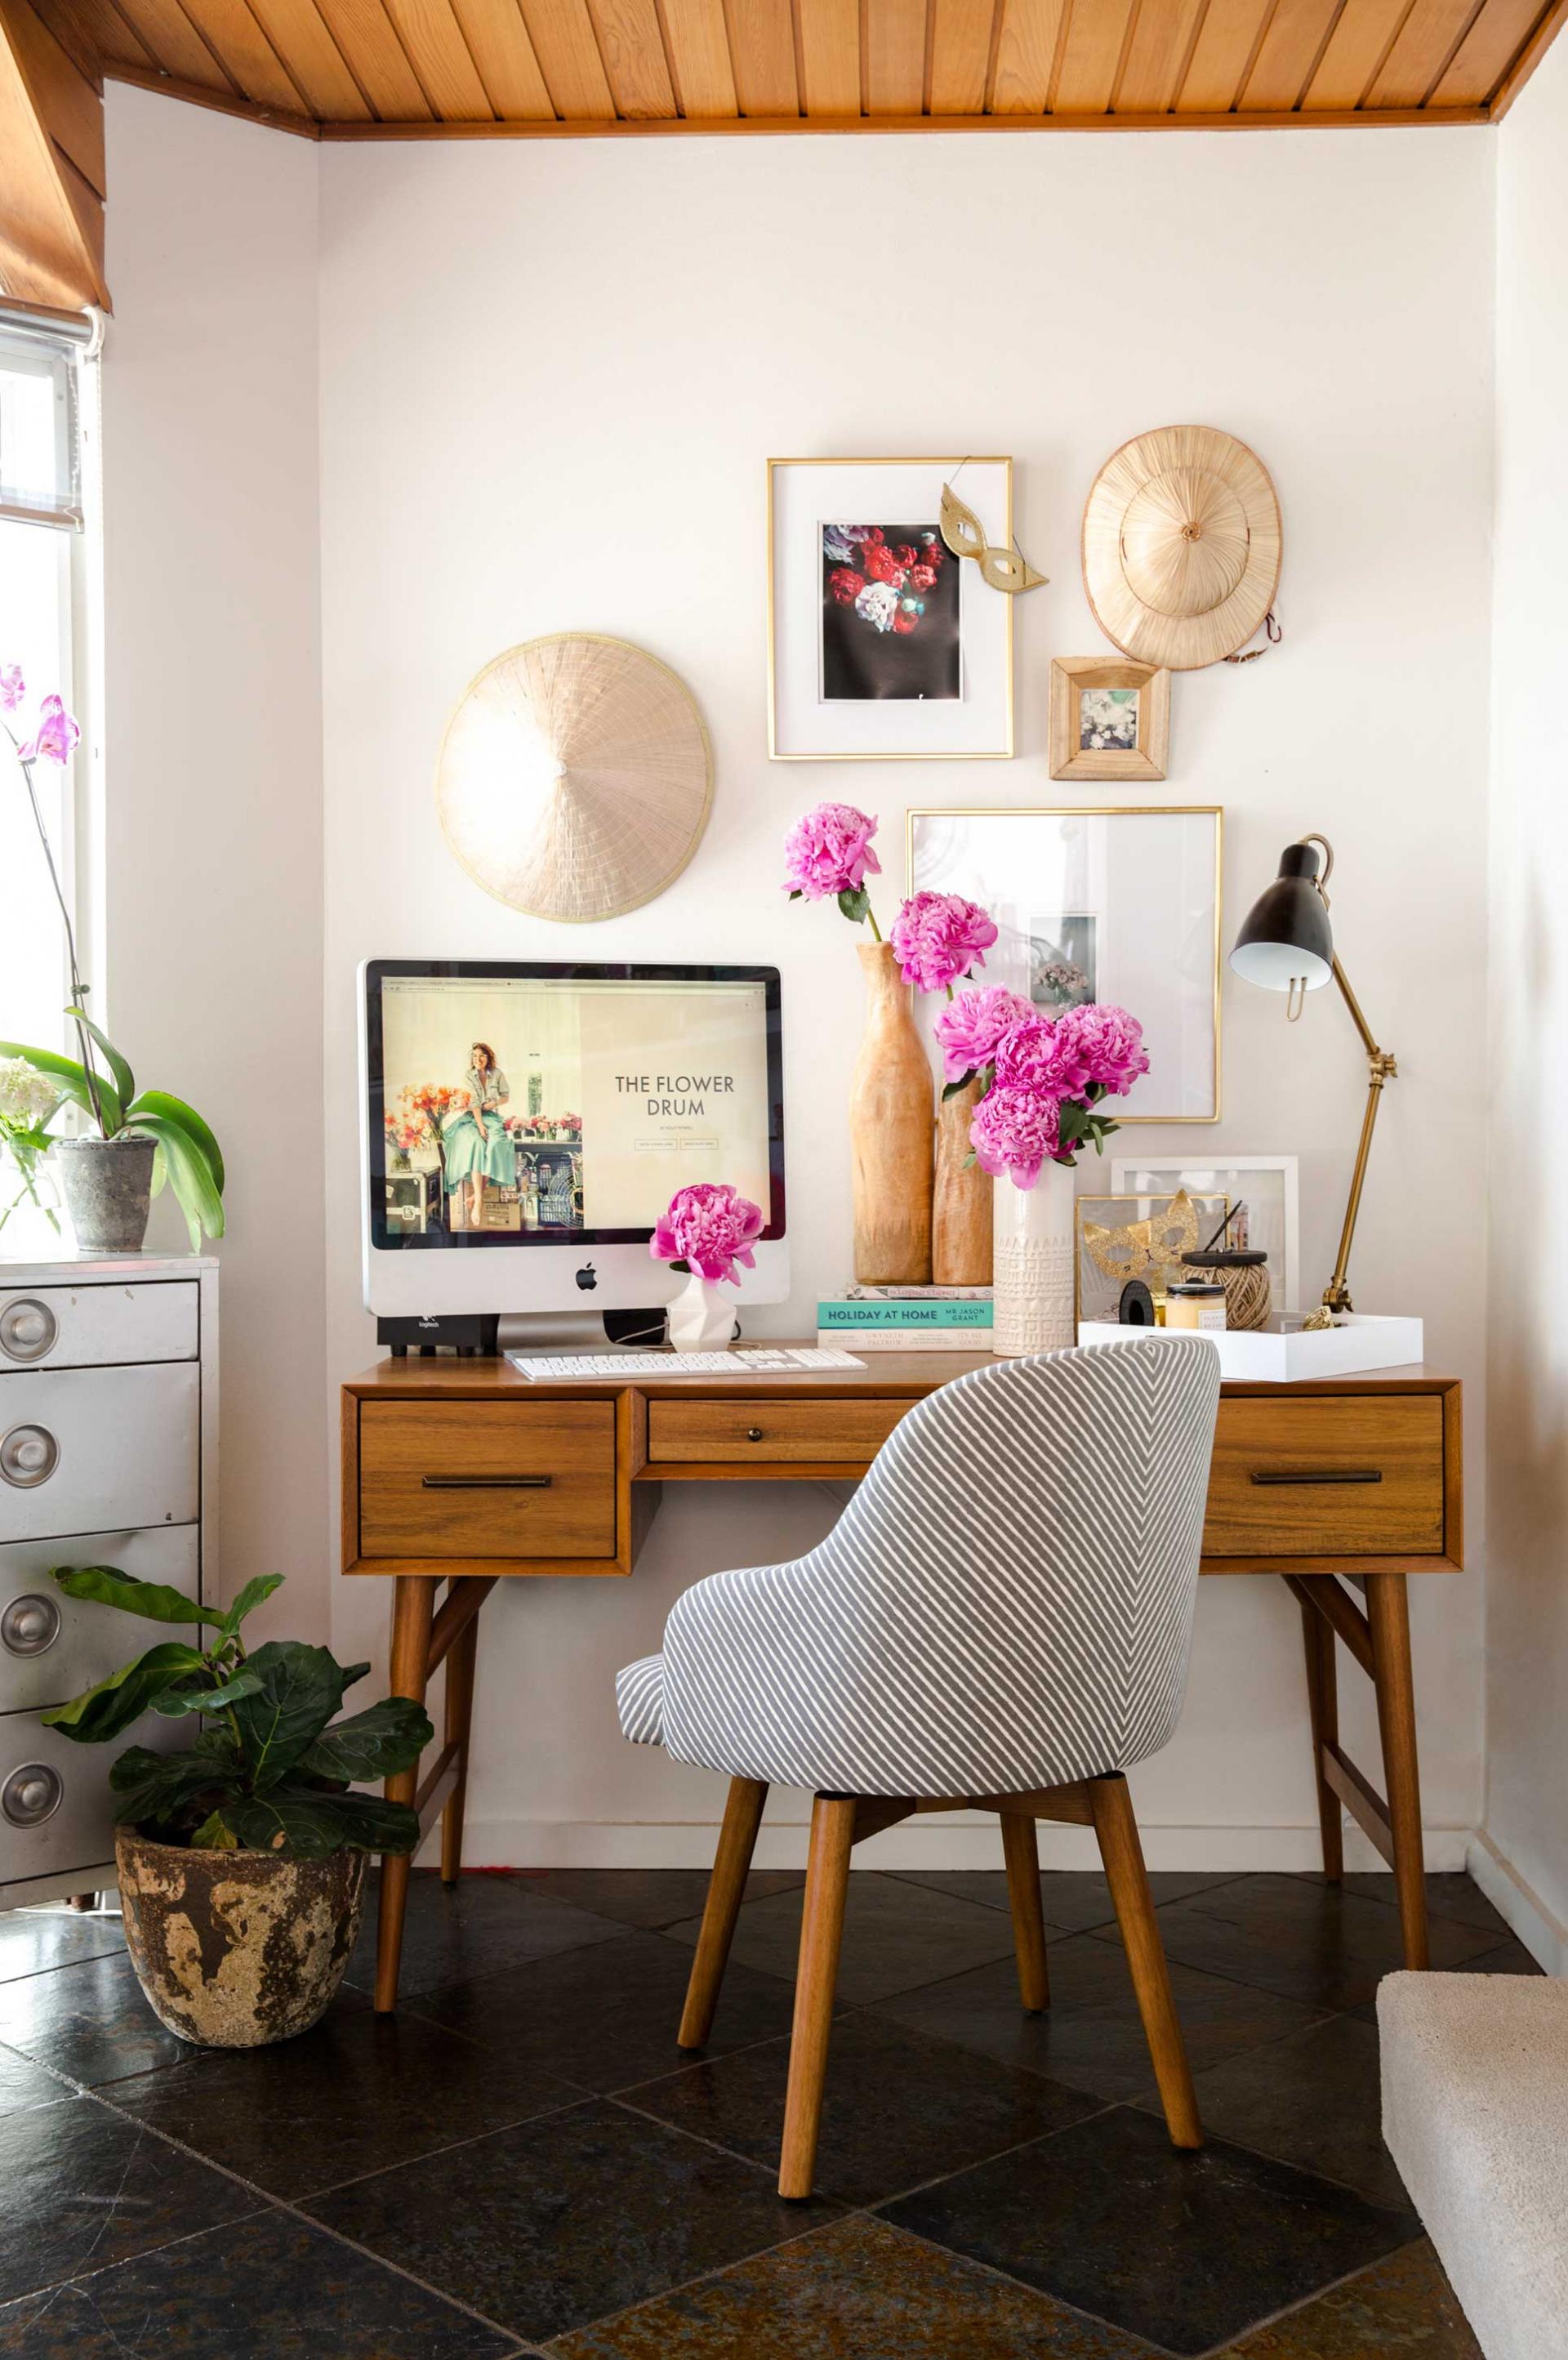 office florals fabulous designs homebnc decor desk workspace inspiration cute lovely decoration decorating deco